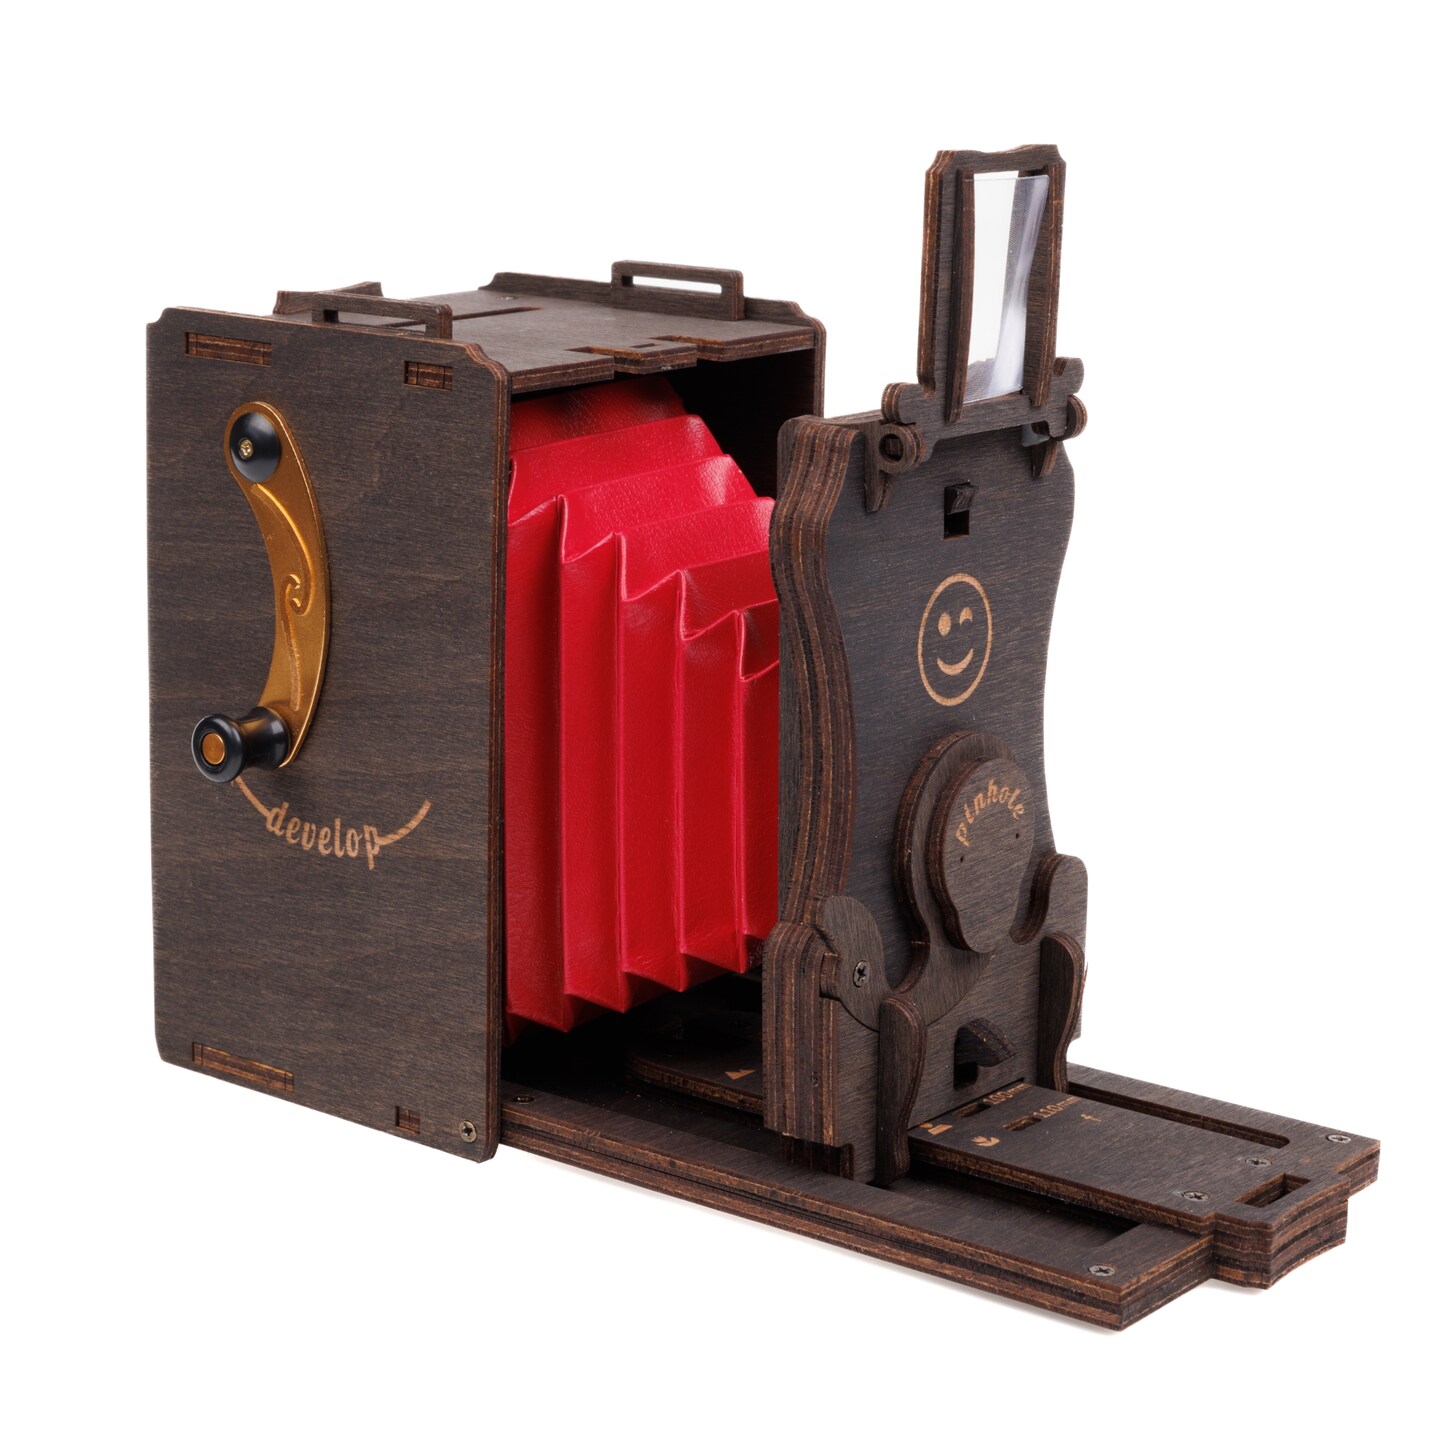 Jollylook DIY Pinhole Instant Film Camera Kit for Self Assembly